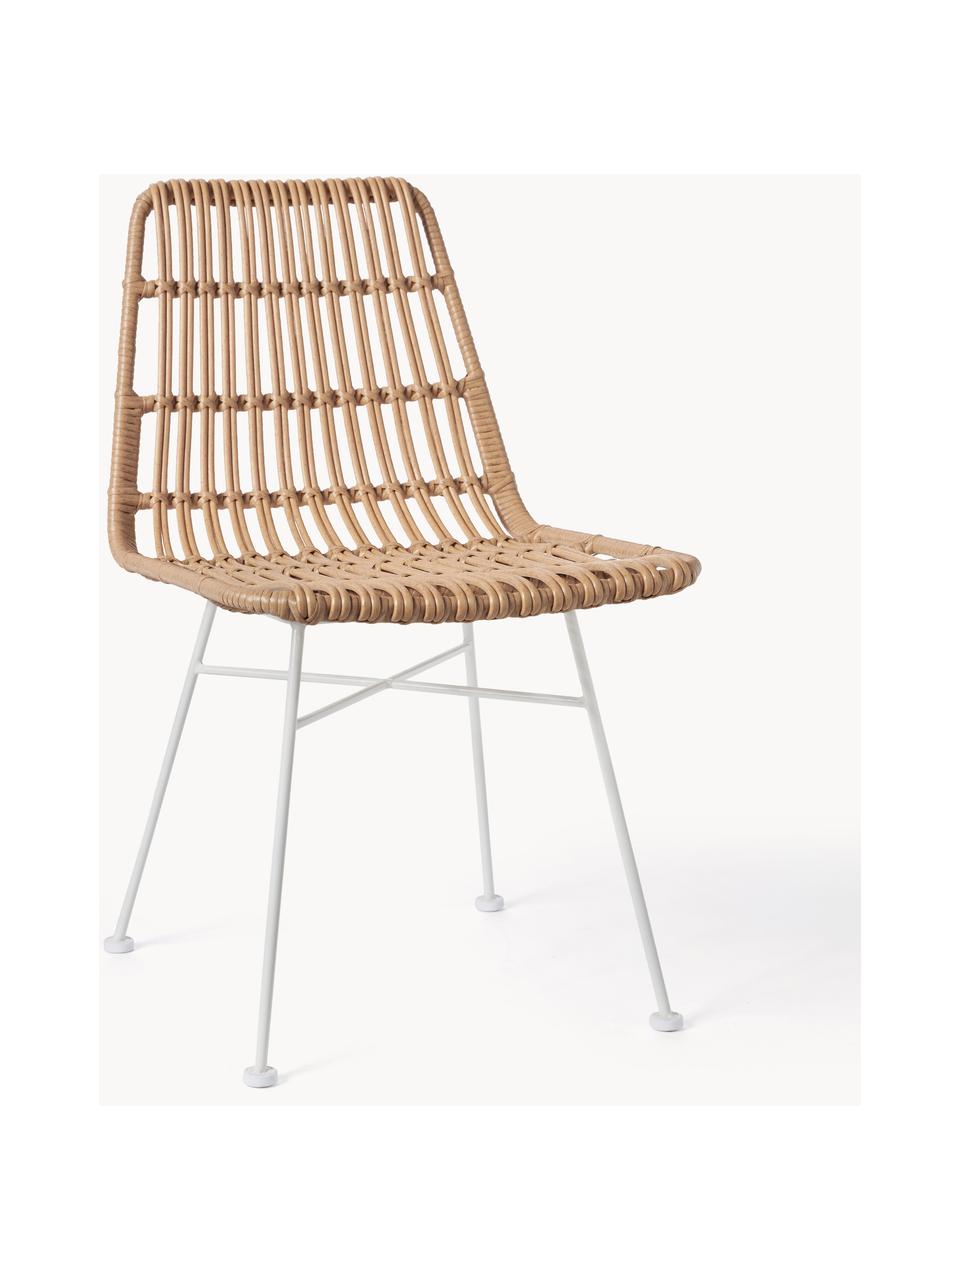 Polyrattan-Stühle Costa, 2 Stück, Sitzfläche: Polyethylen-Geflecht, Gestell: Metall, pulverbeschichtet, Hellbraun, Weiß, B 47 x T 61 cm